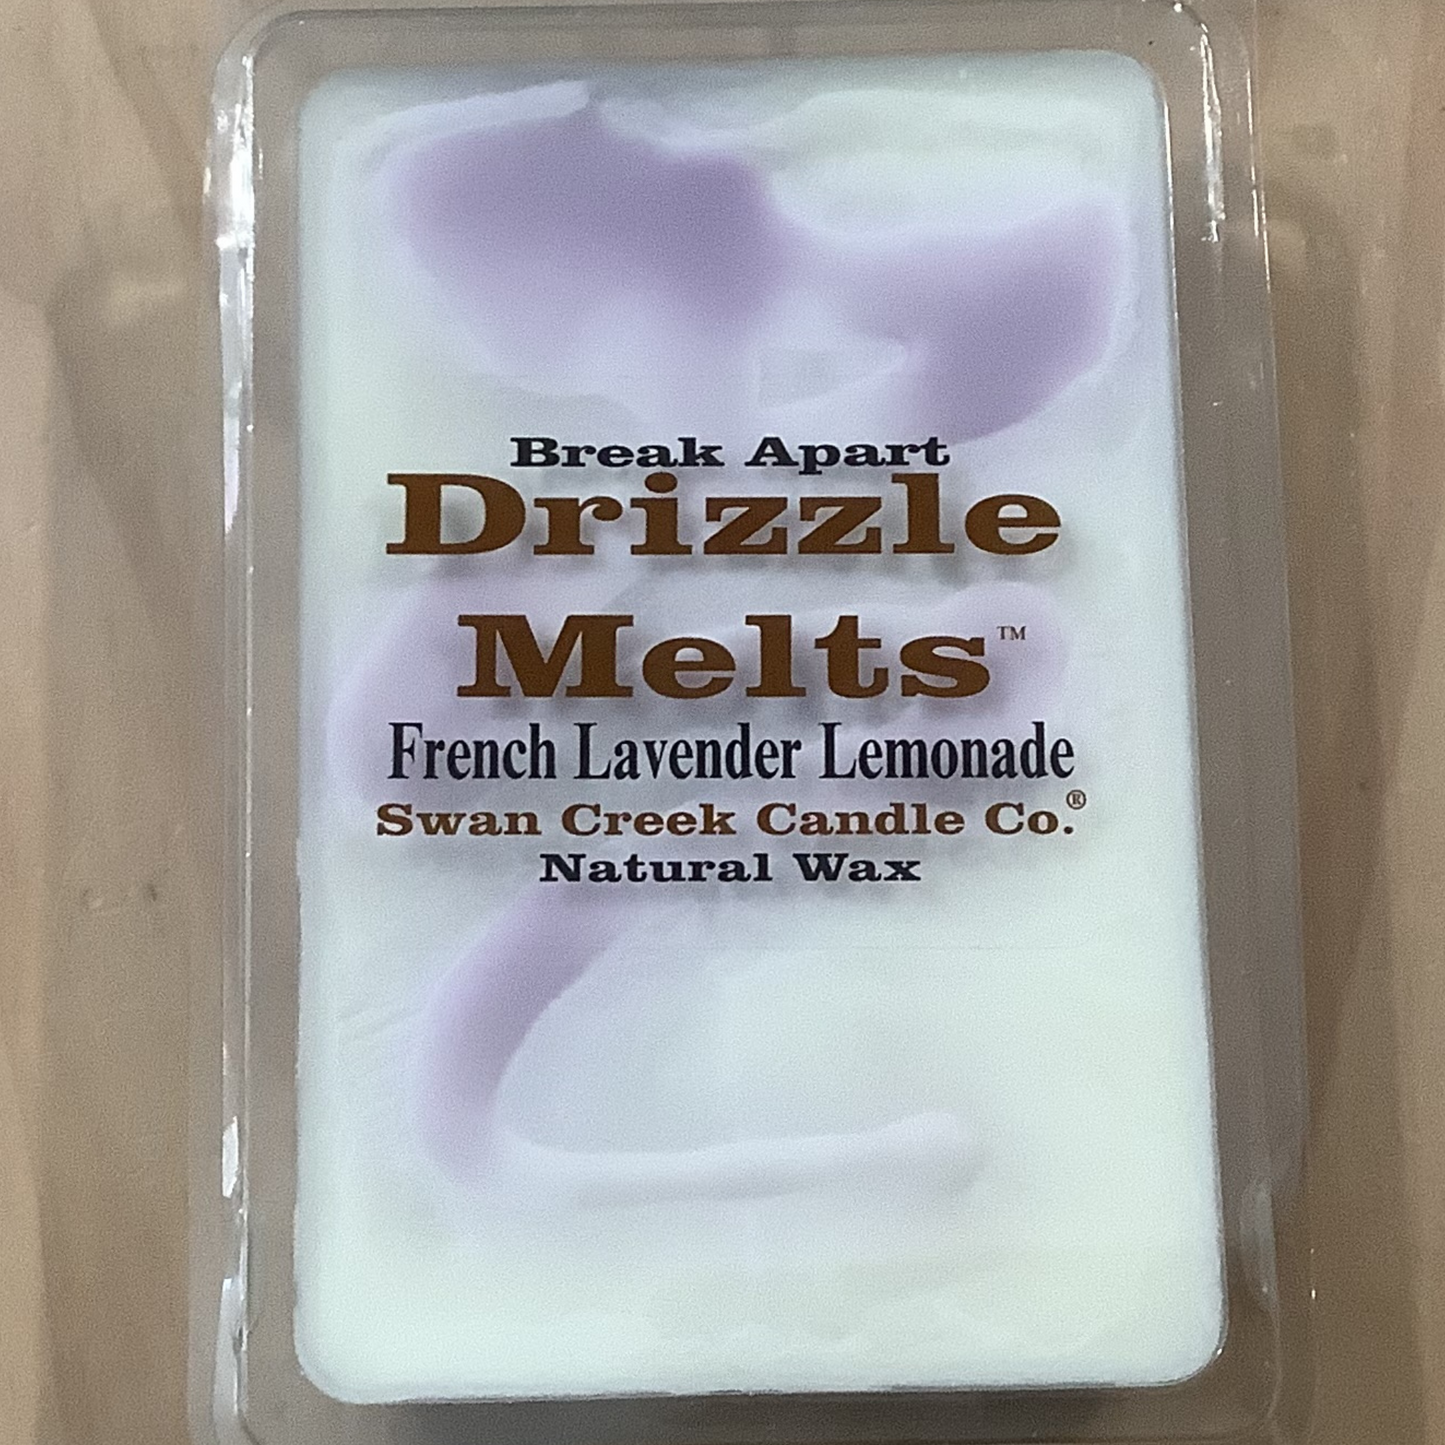 French Lavender Lemonade Drizzle Melts